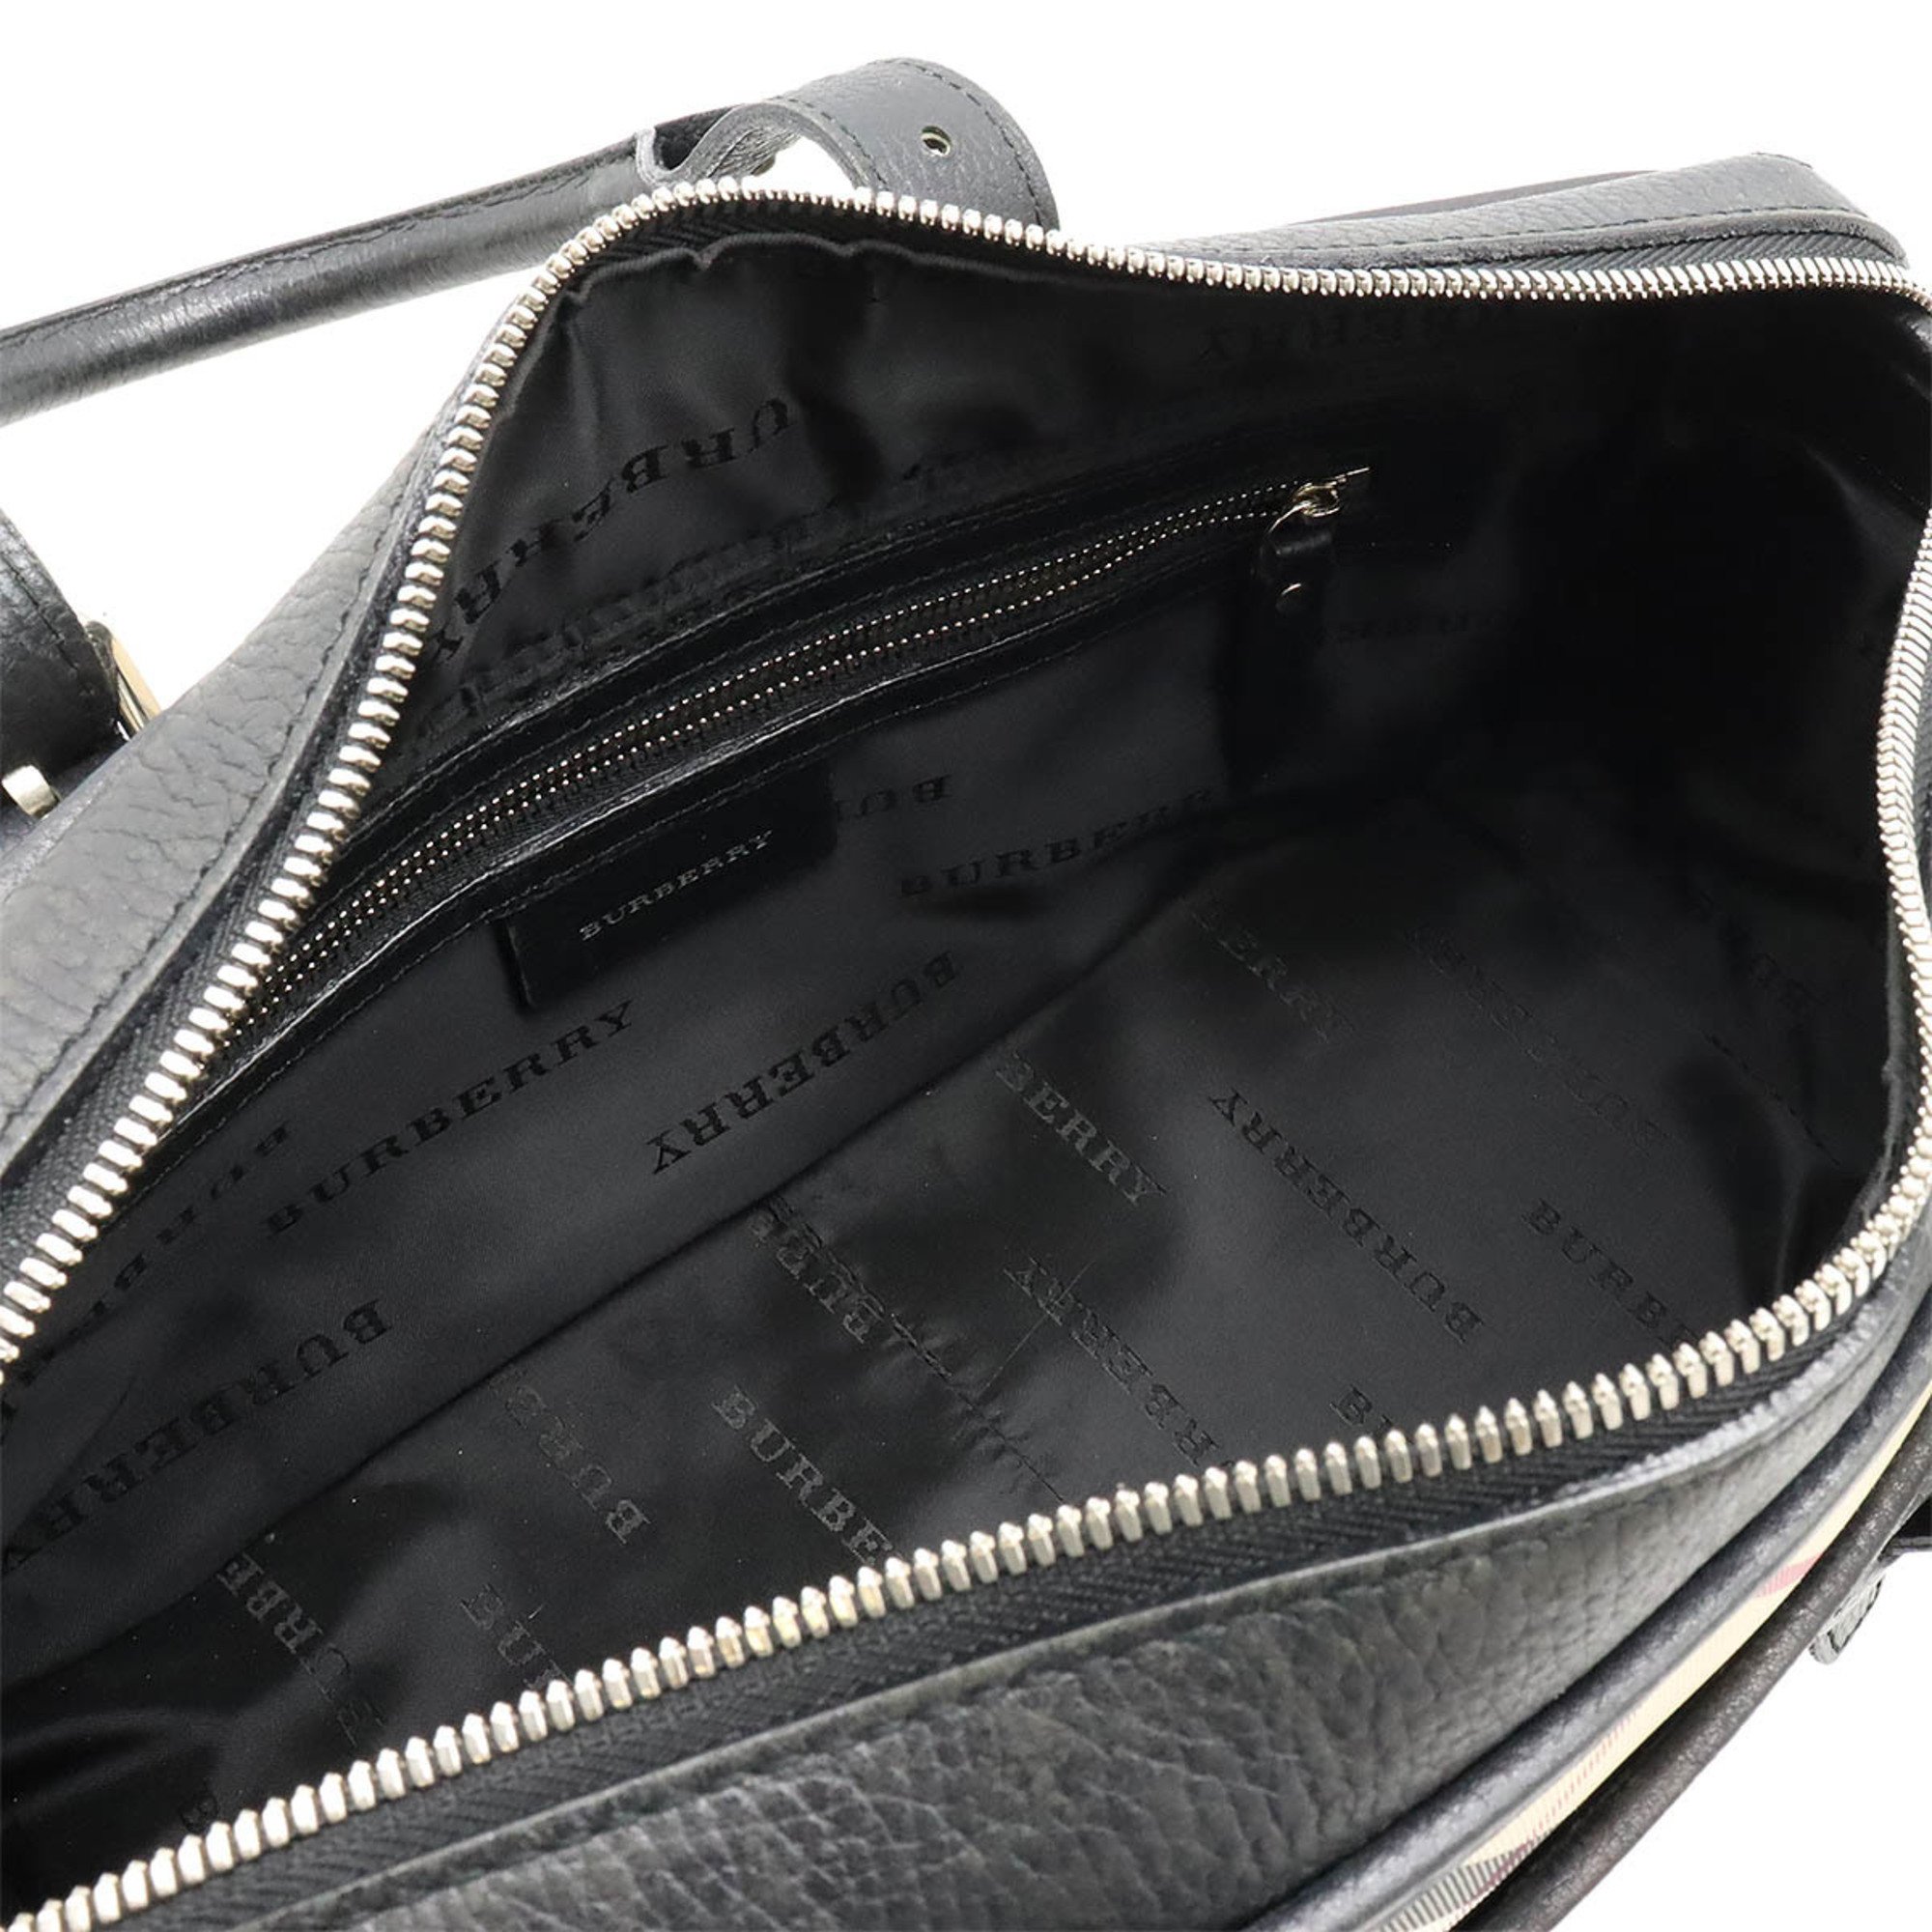 BURBERRY handbag Boston bag check pattern nylon leather black